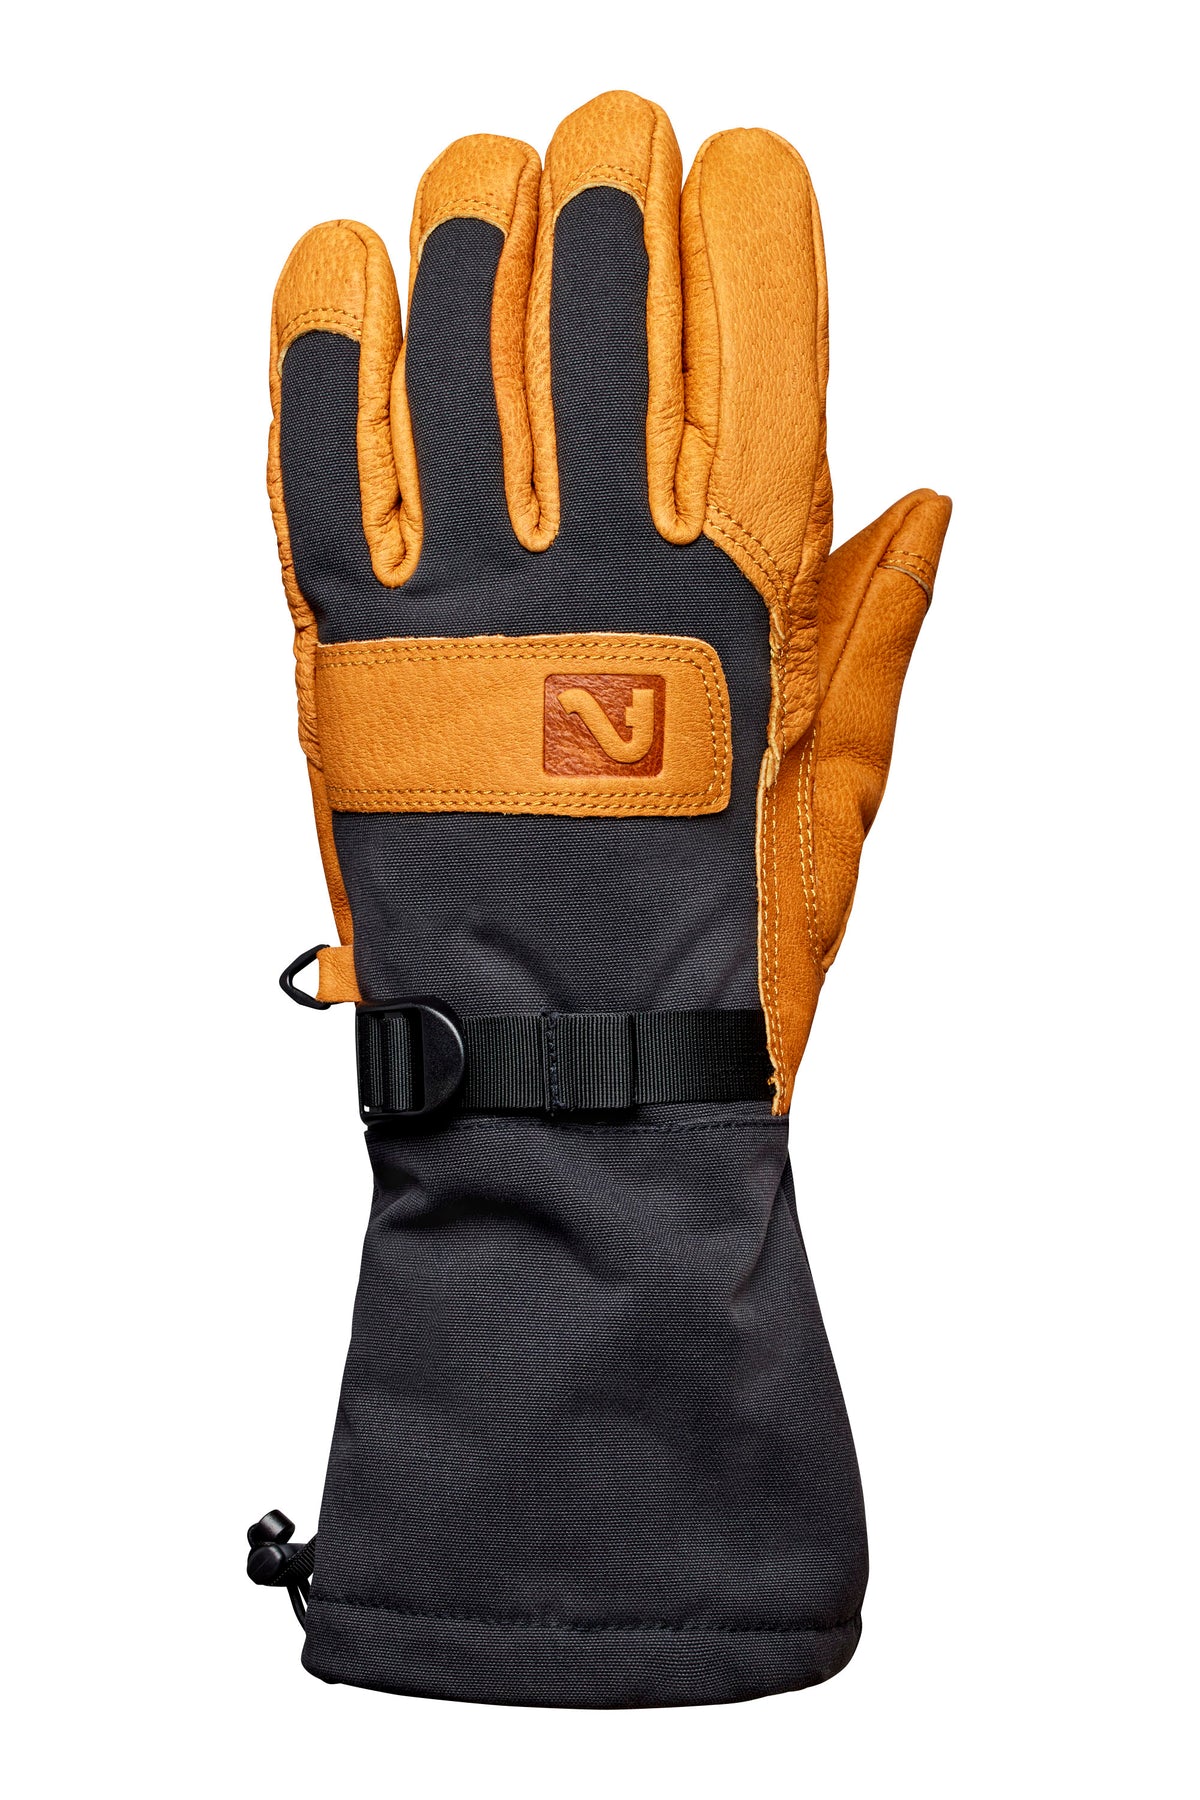 2022 Super Glove - Now On Sale | Flylow – Flylow Gear